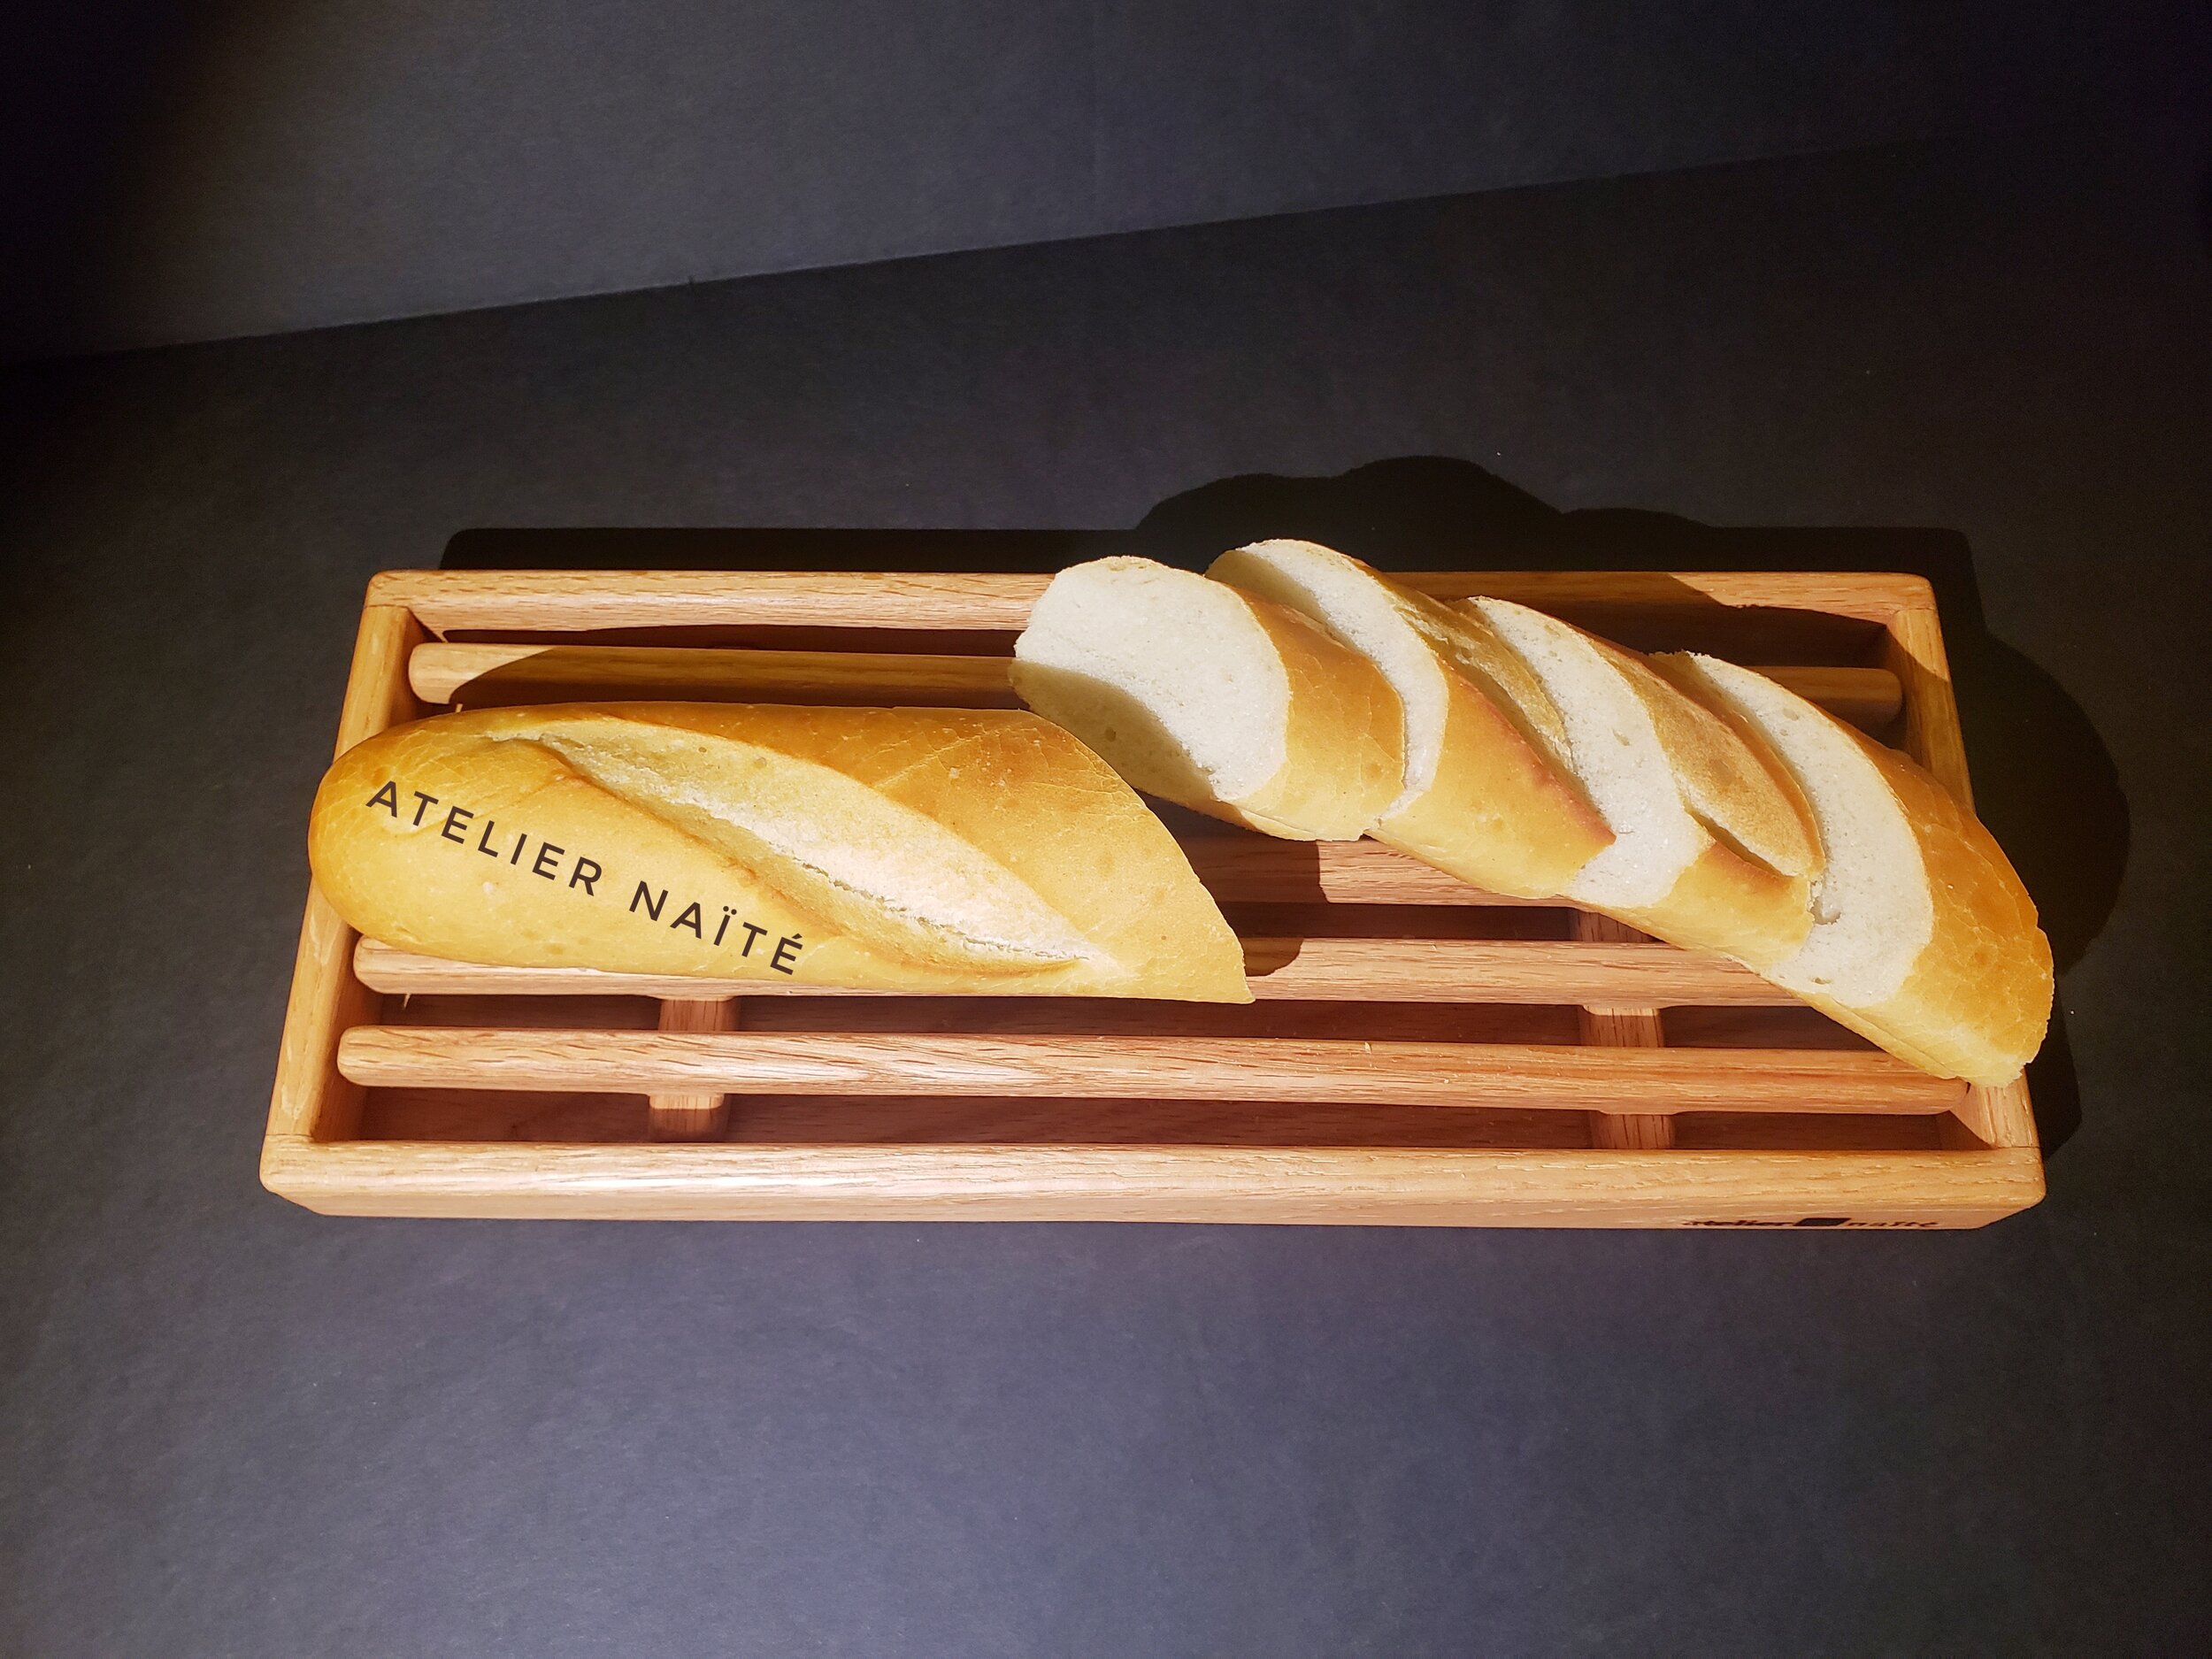 Woodworking: Bread Cutting Board 